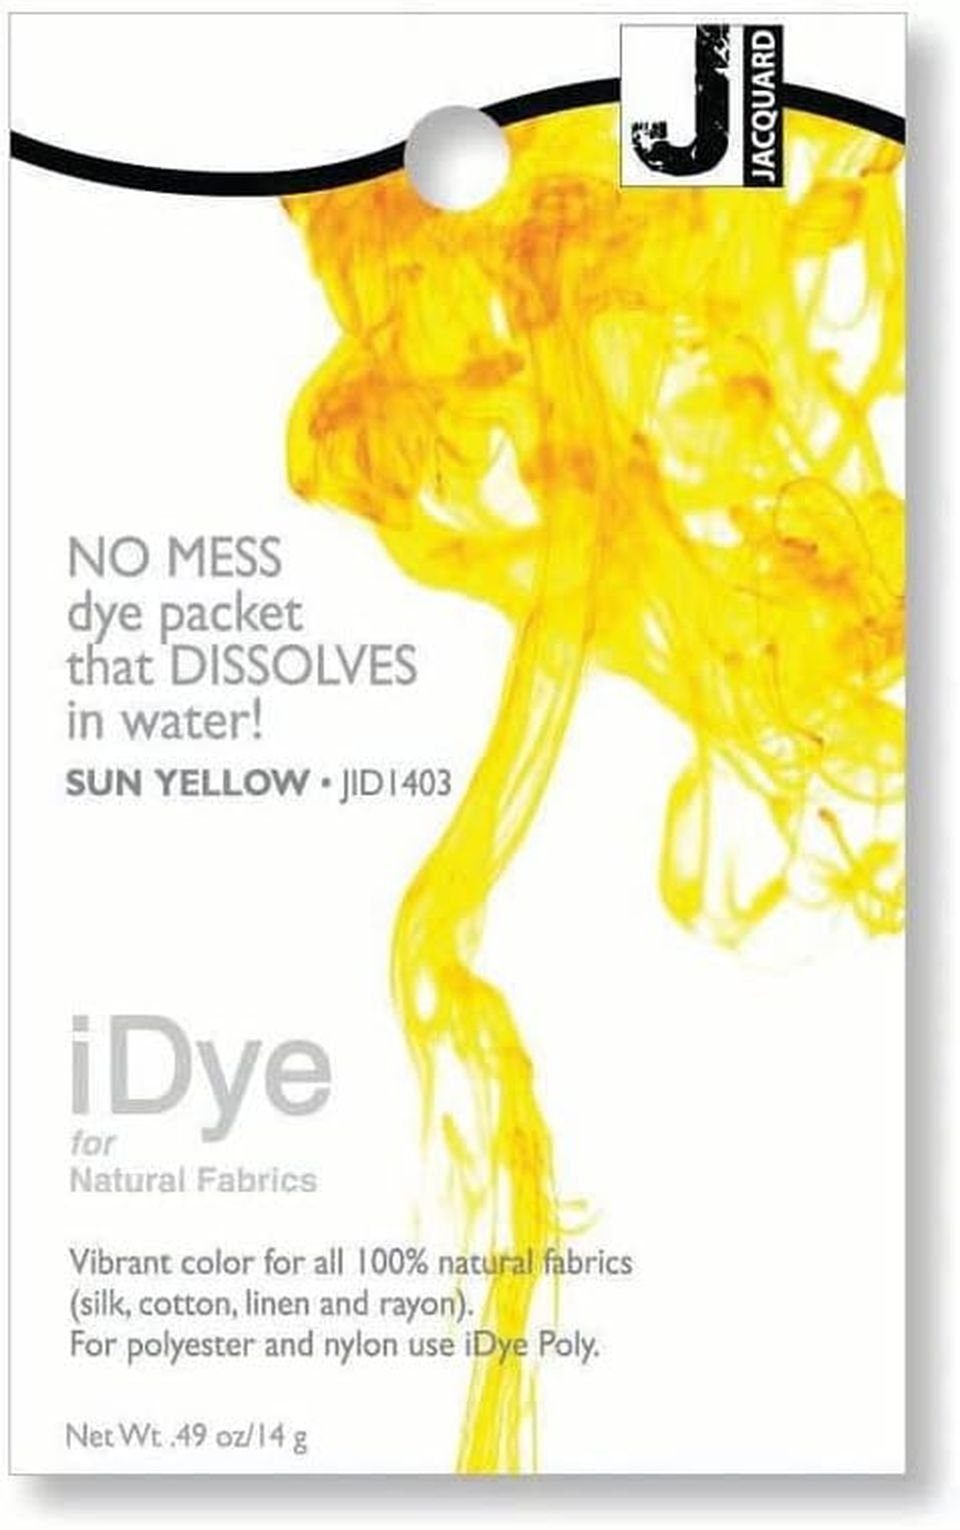 Jacquard Textilfarbe iDye Natural, Färbemittel für Naturgewebe, 14g